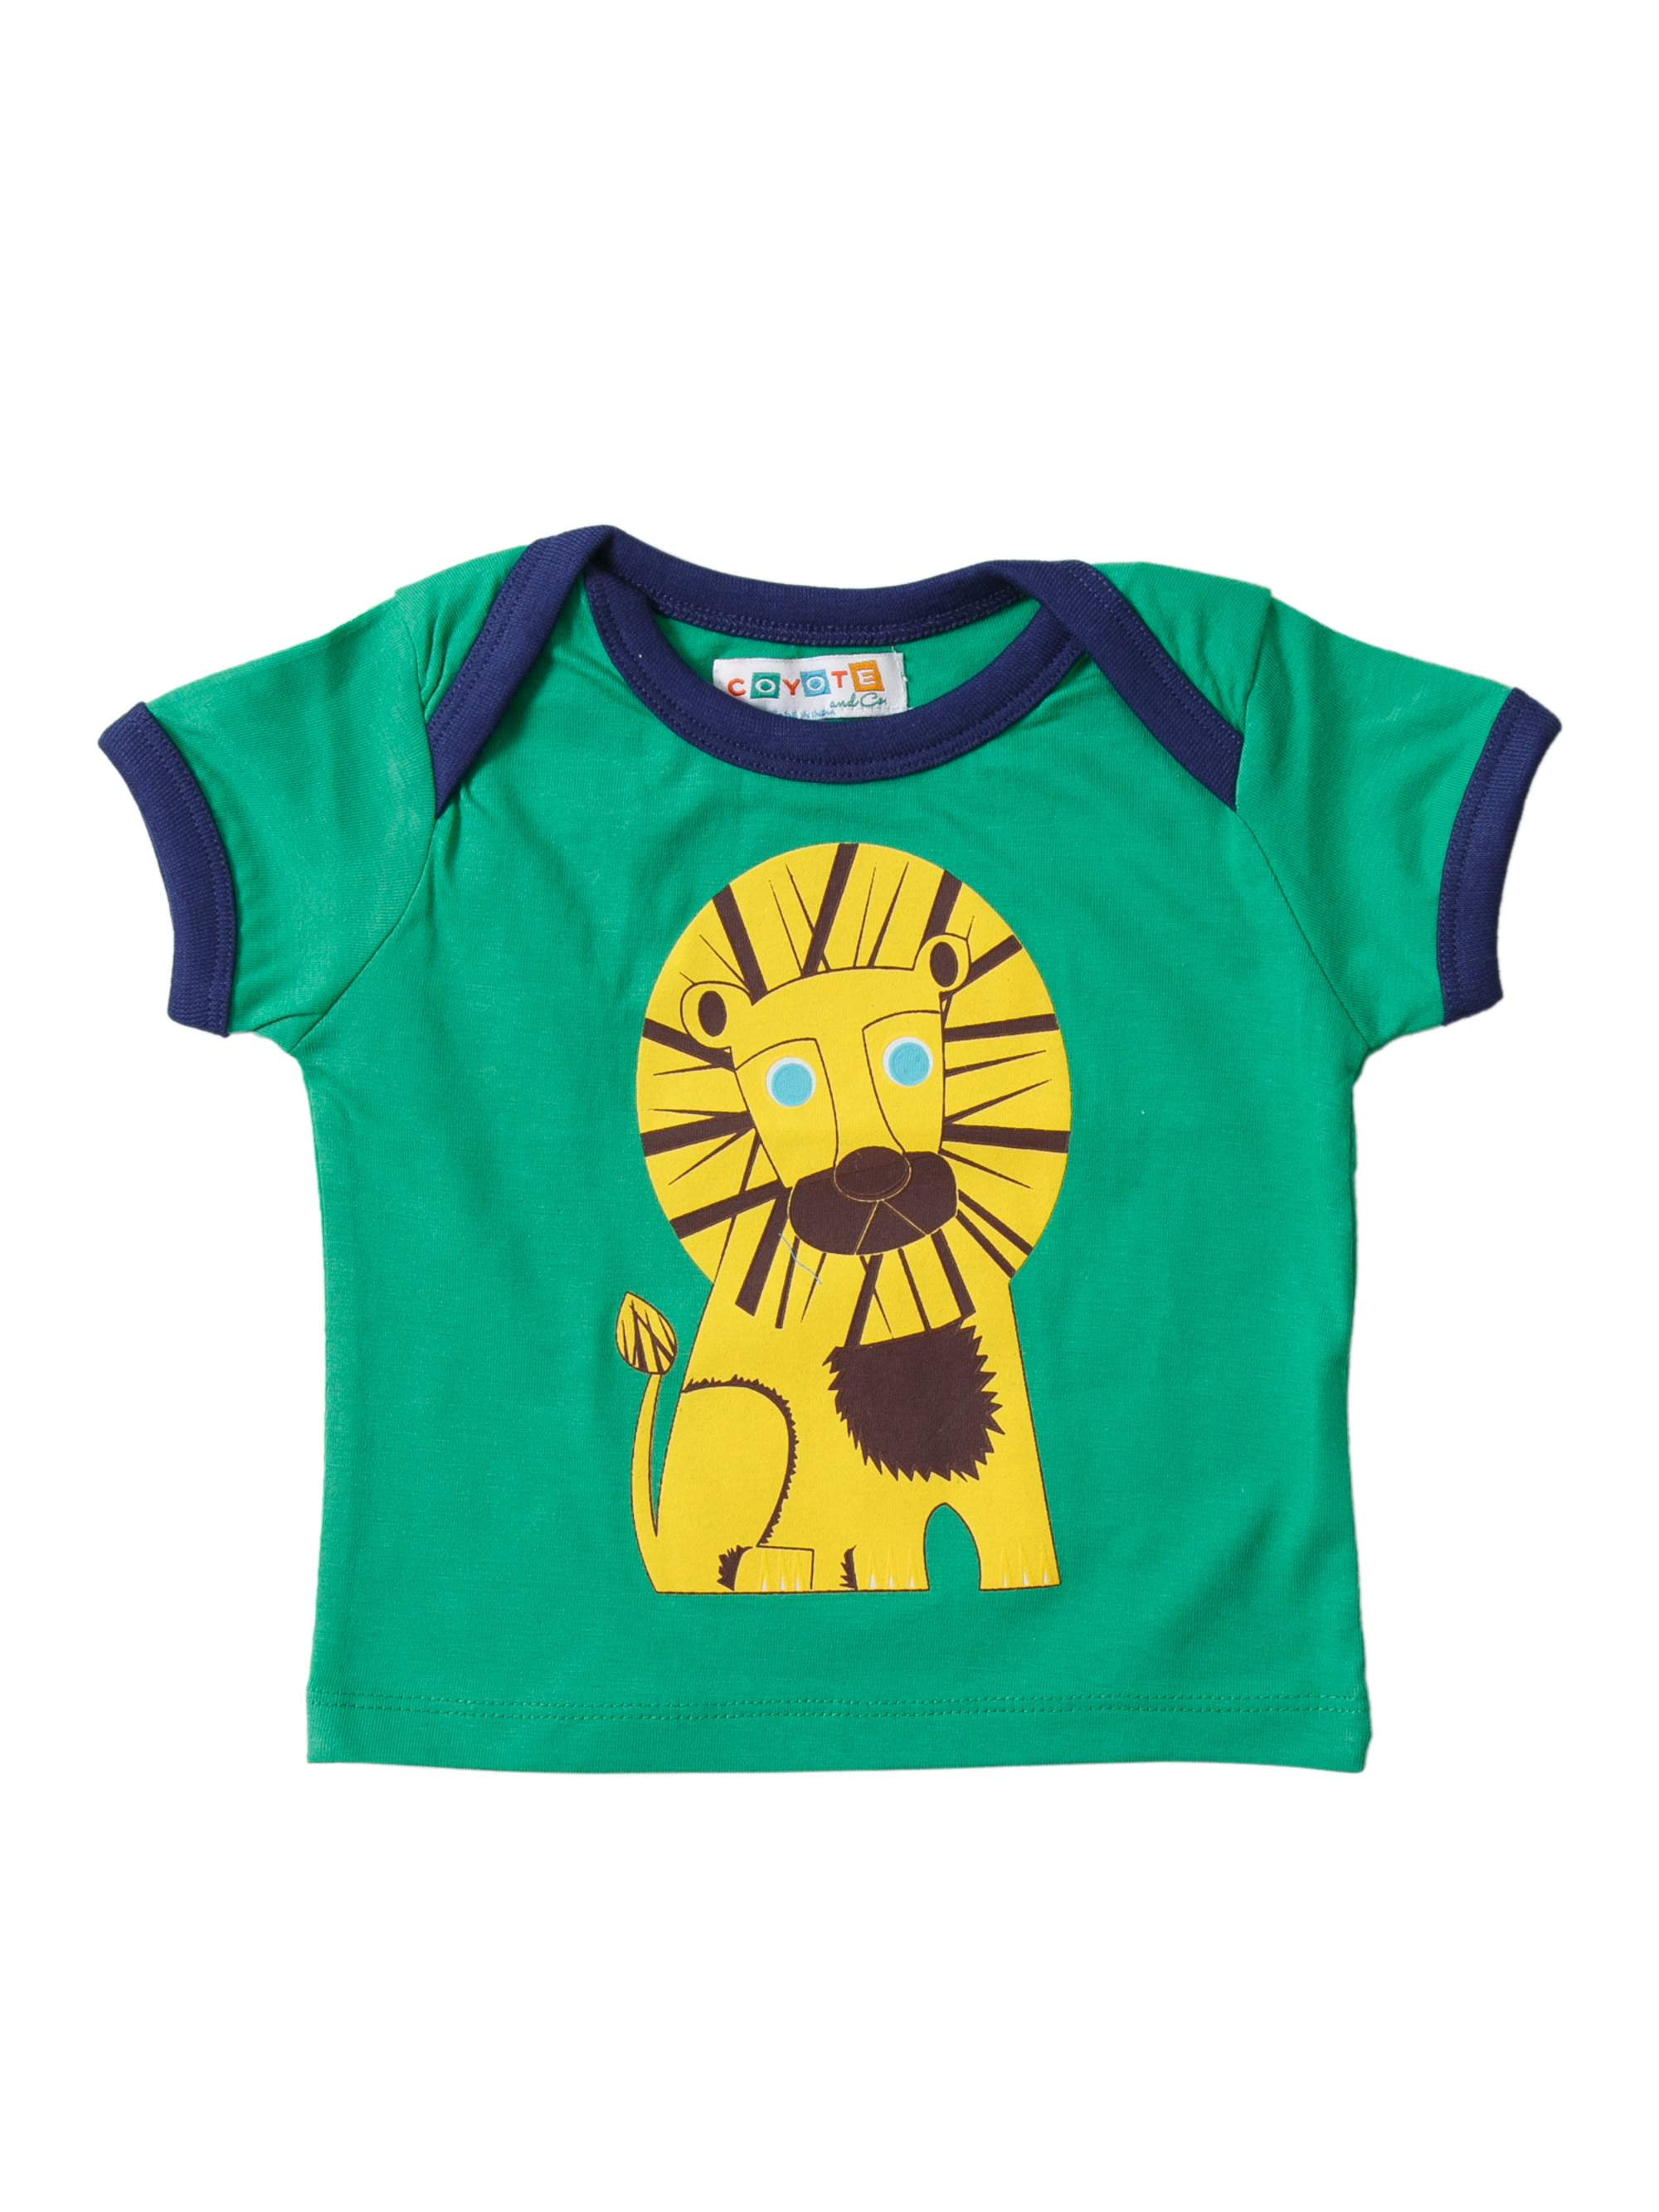 Rockin' Baby - Coyote & Co. Baby Boy Graphic T-shirt - Walmart.com ...